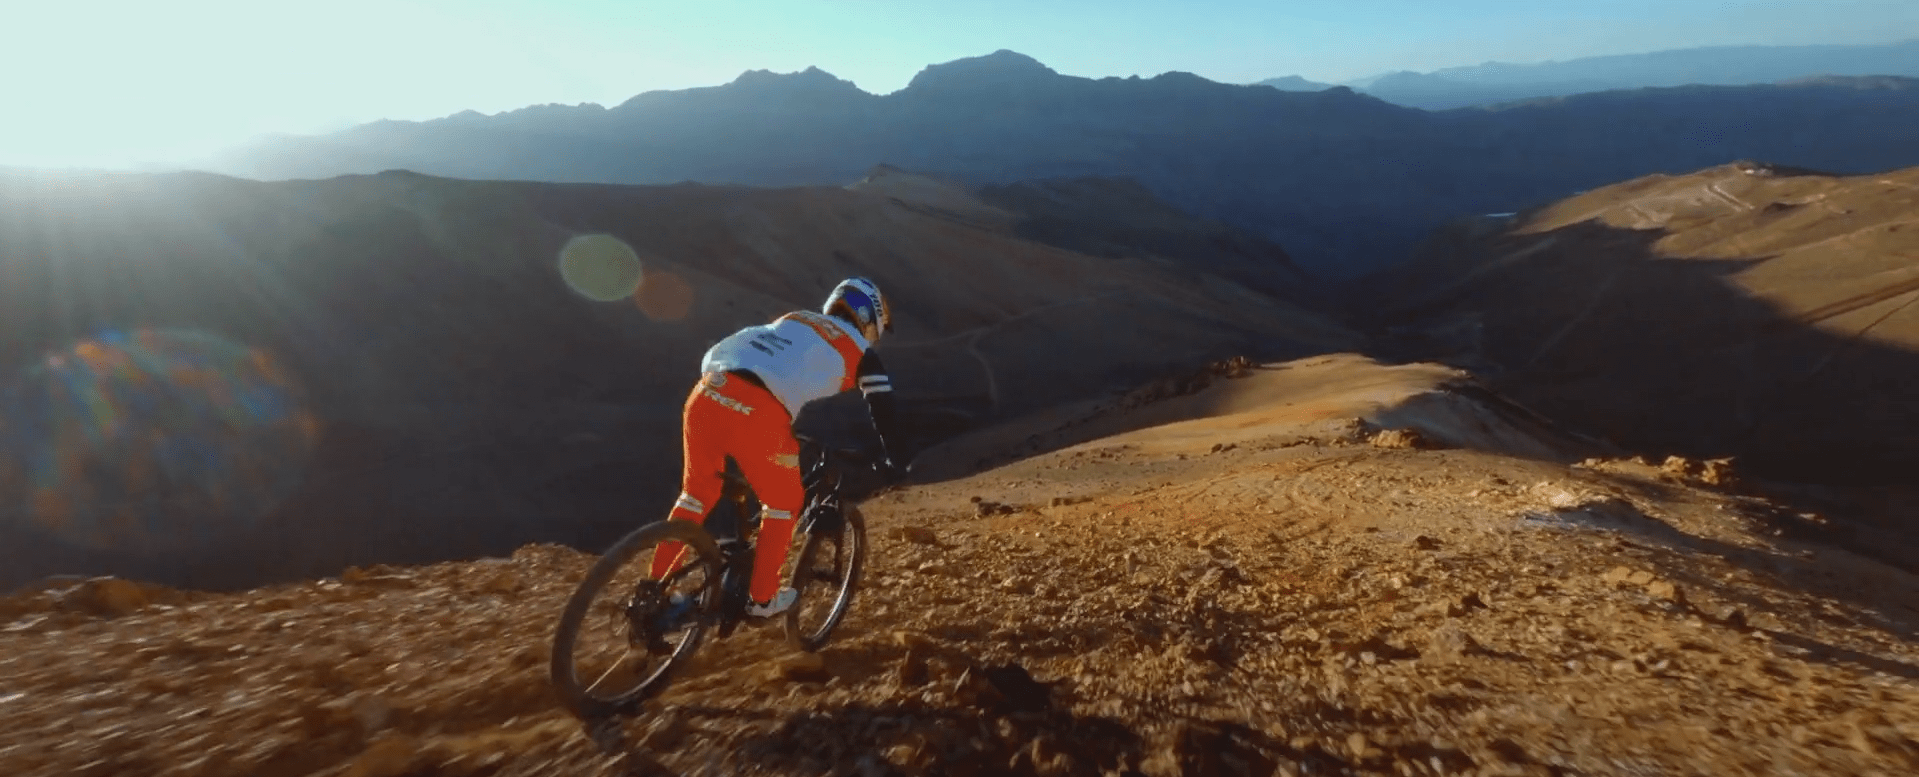 Pedro Burns mountain biking